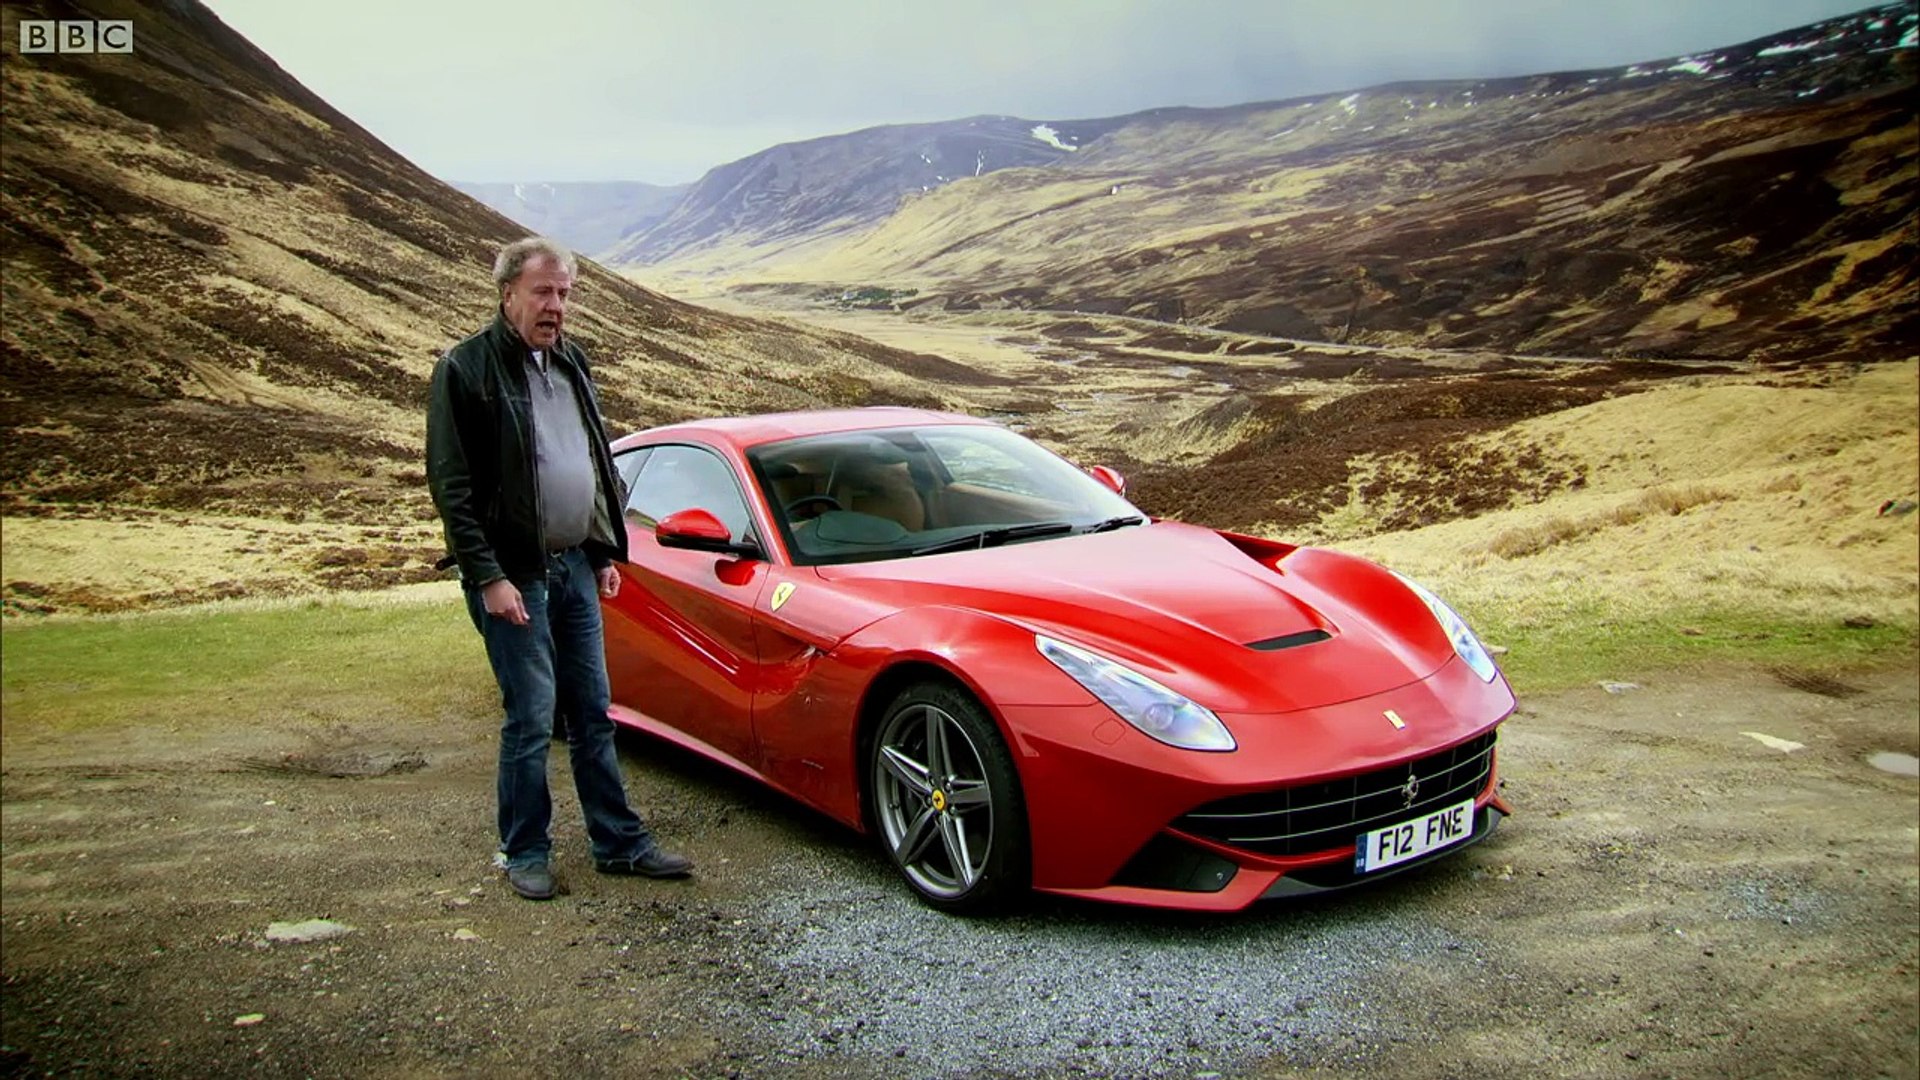 Ferrari F12 review Top Gear Series 20 BBC - video Dailymotion